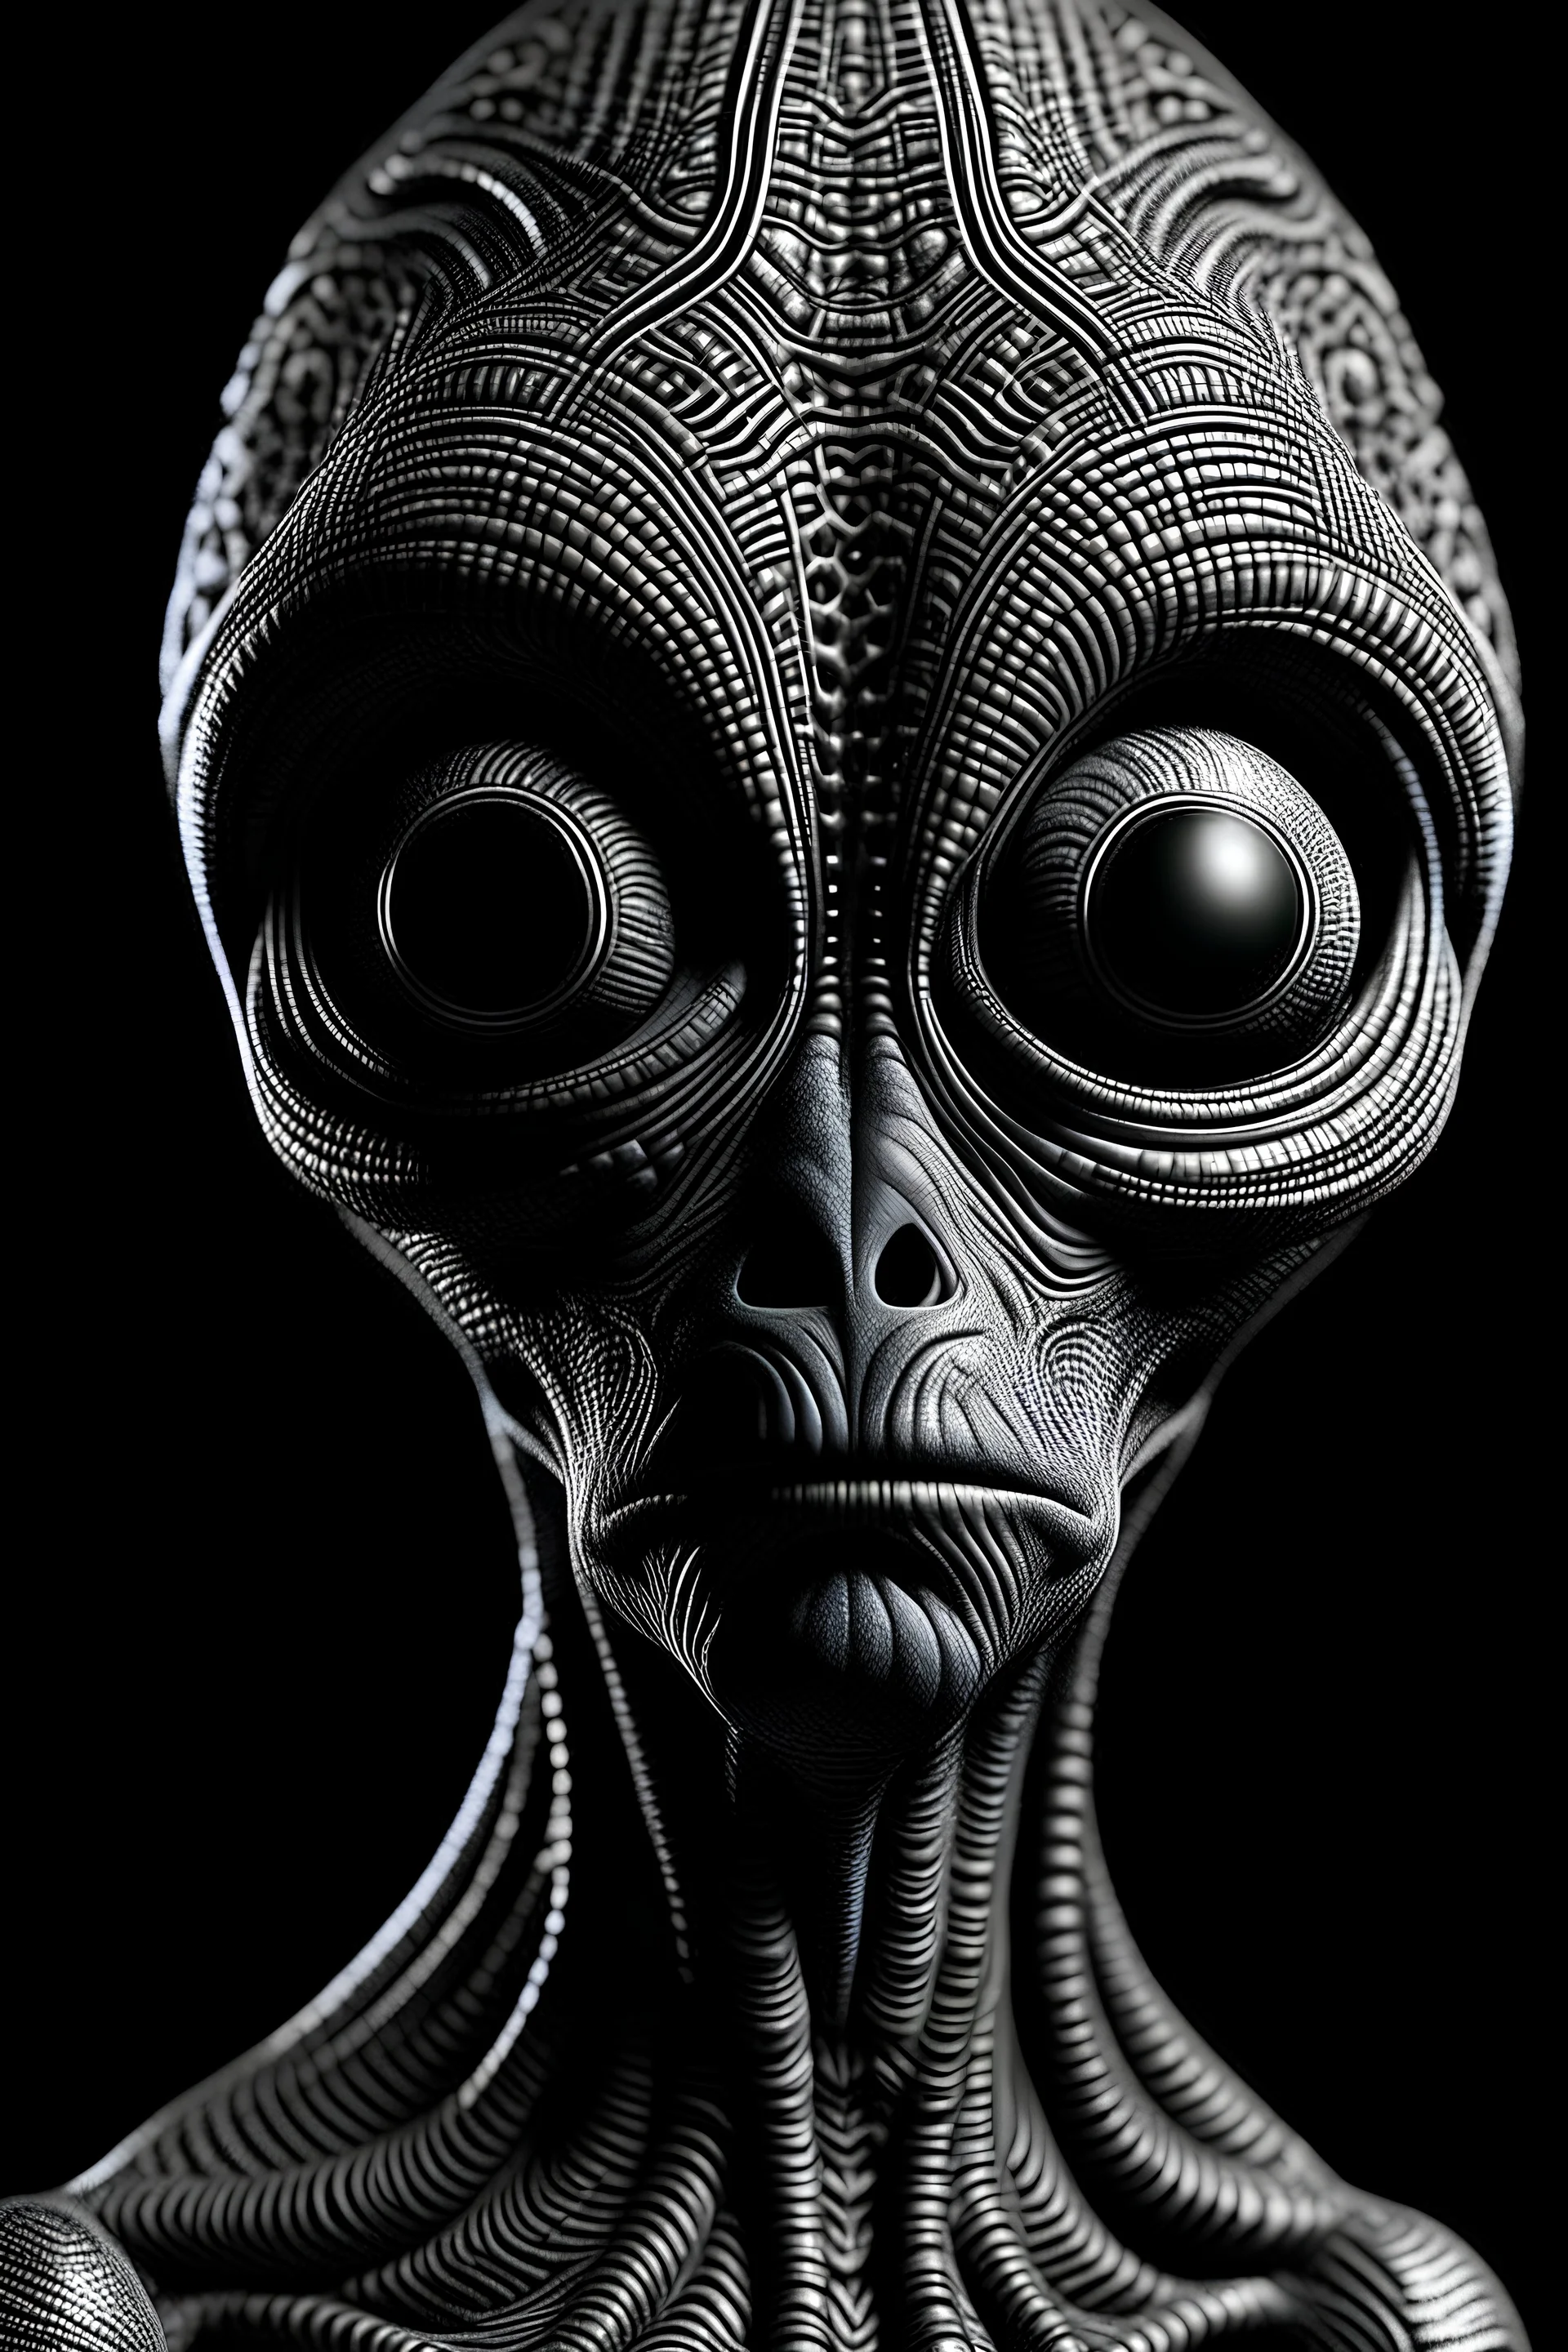 Hypnosis patten alien